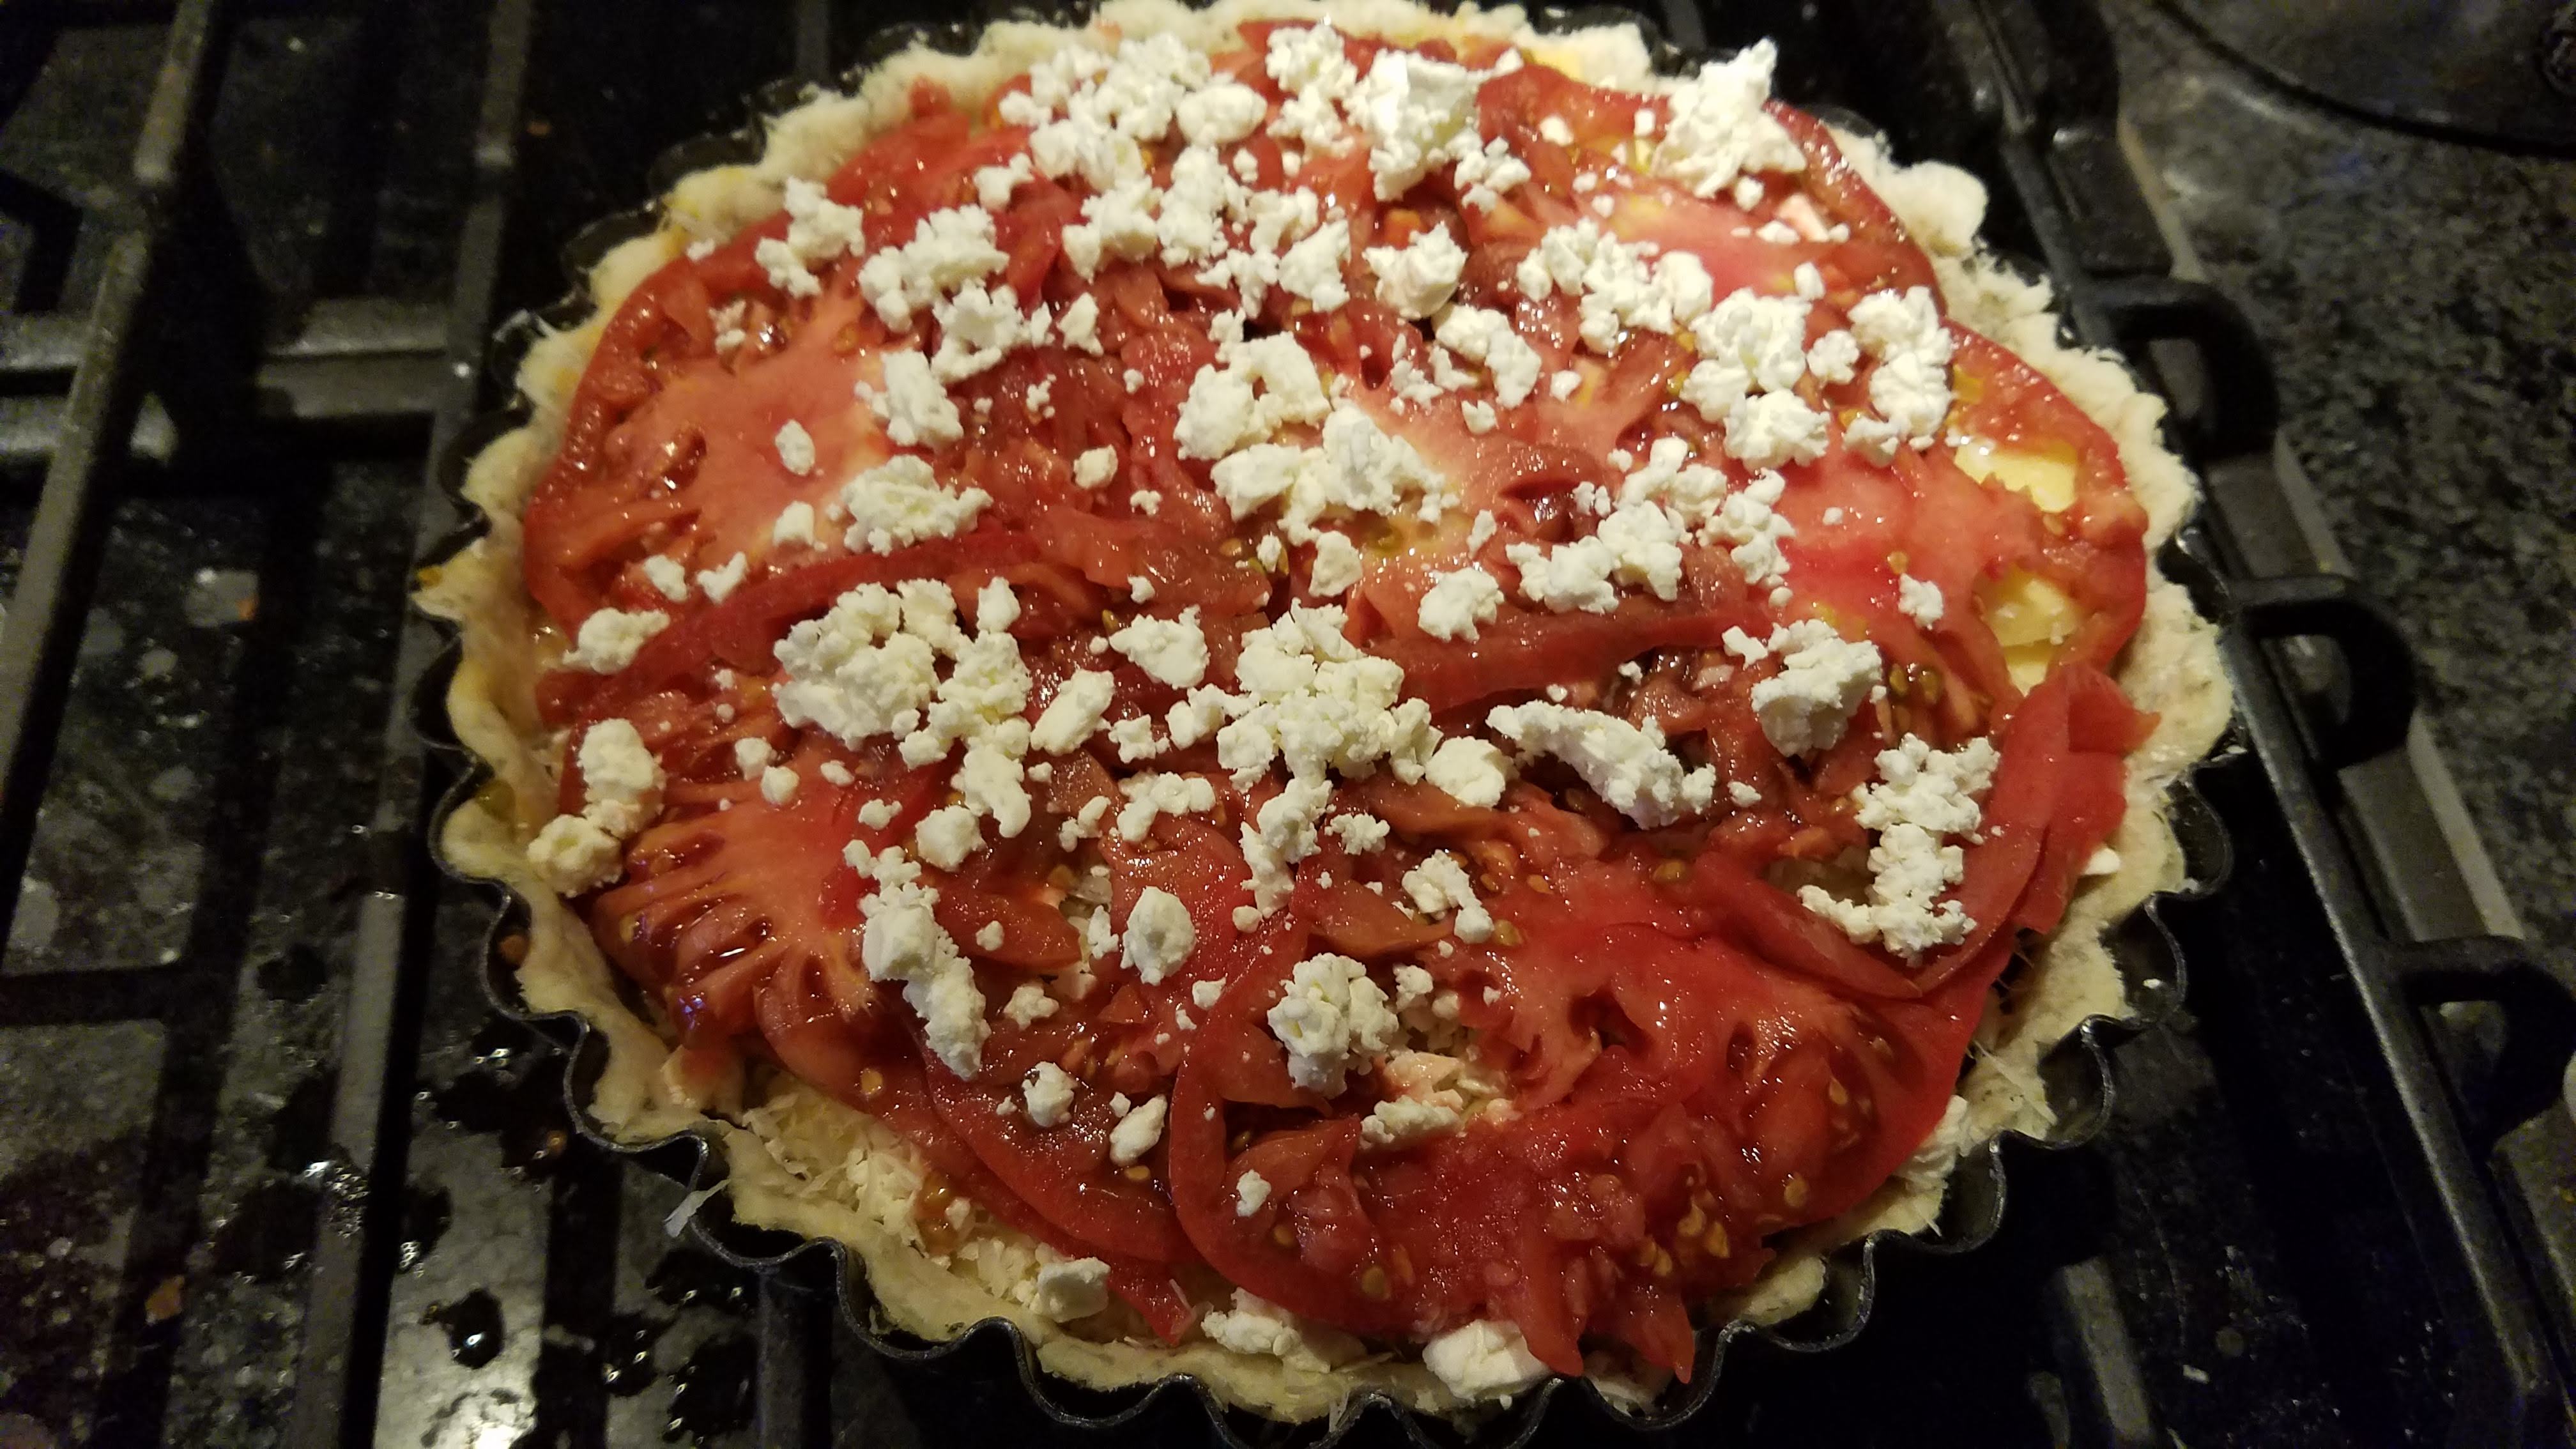 Savory Tart Recipe, Potato Tomato and Feta Tart, tomato tart recipe